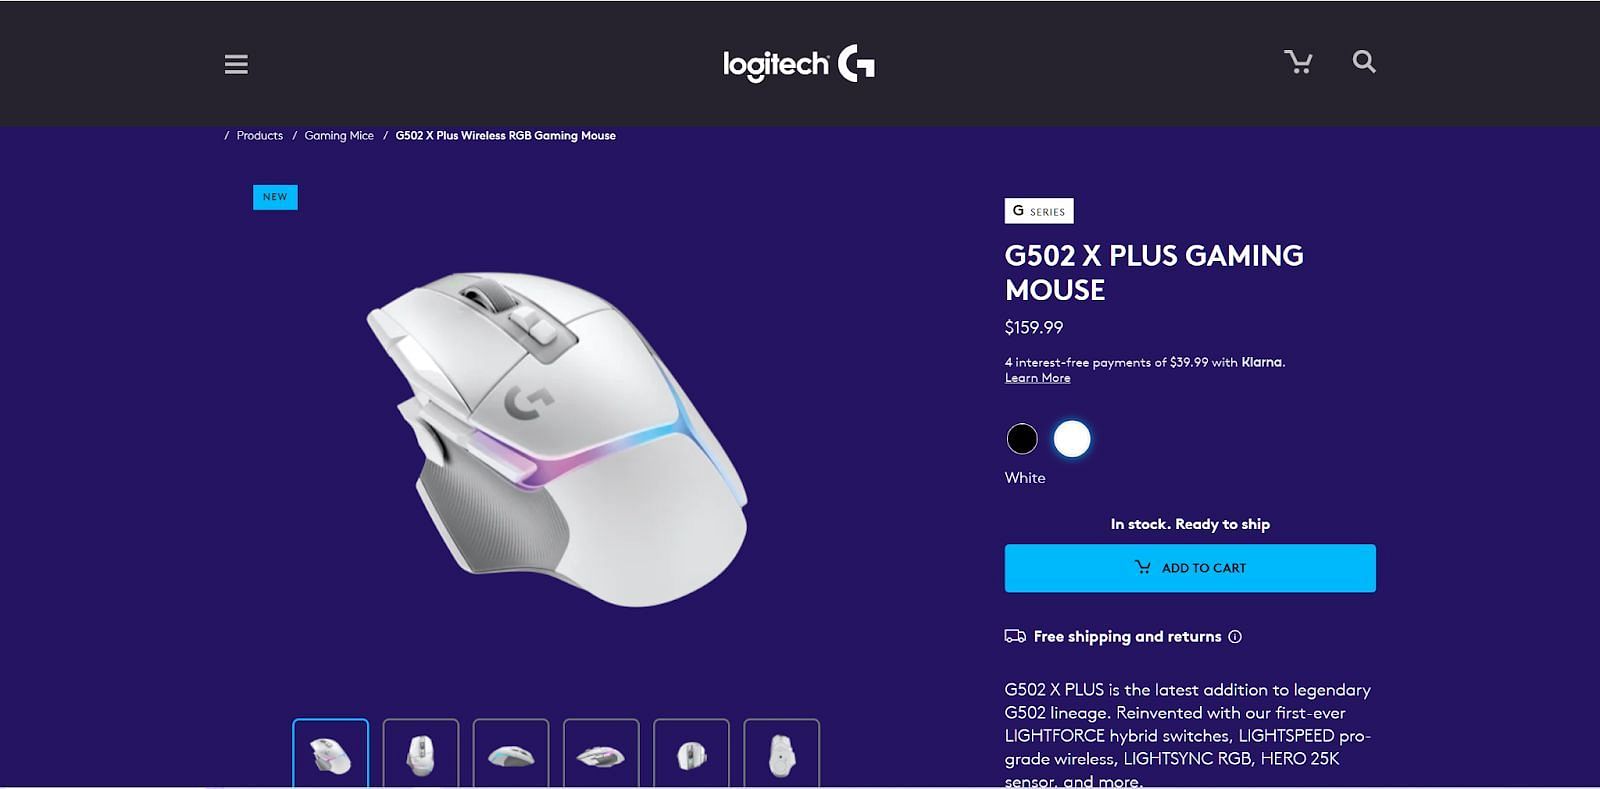 The official Logitech G502 X PLUS gaming mouse page (Image via Logitech G)